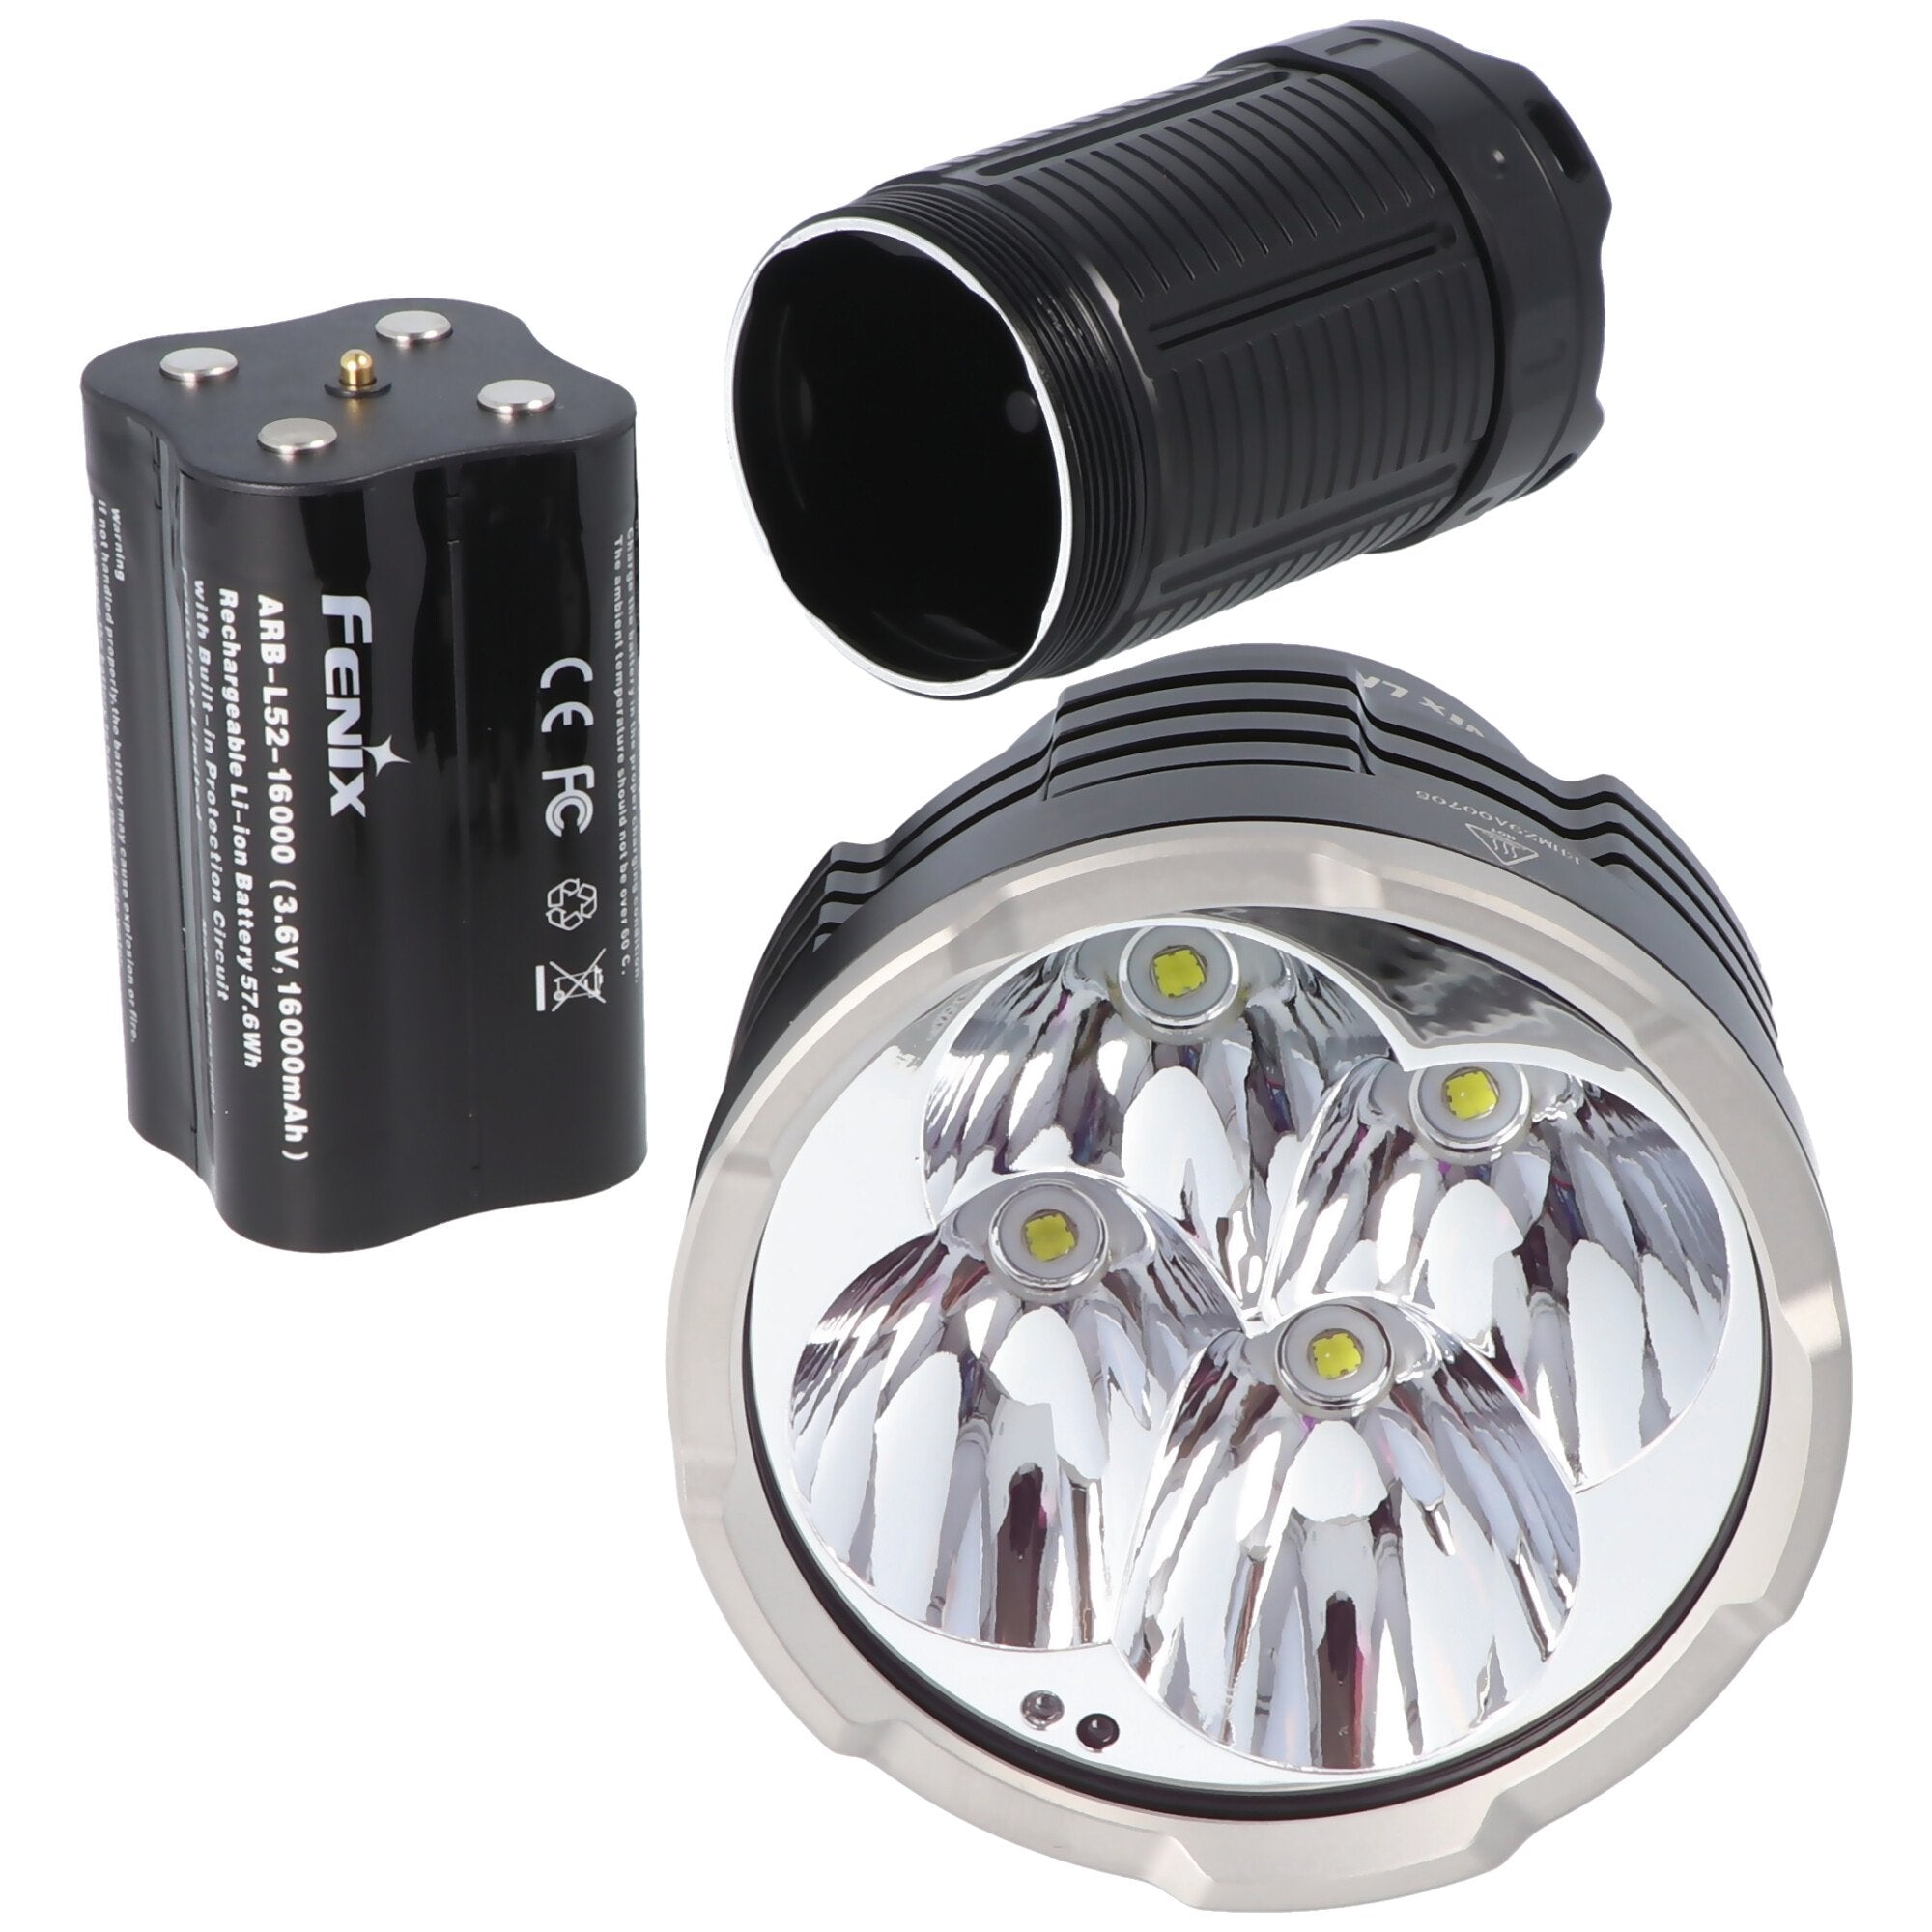 Fenix LR50R LED zaklamp TK75, 12000 lumen, 950 meter bereik, USB-C oplaadpoort, powerbank functie, i